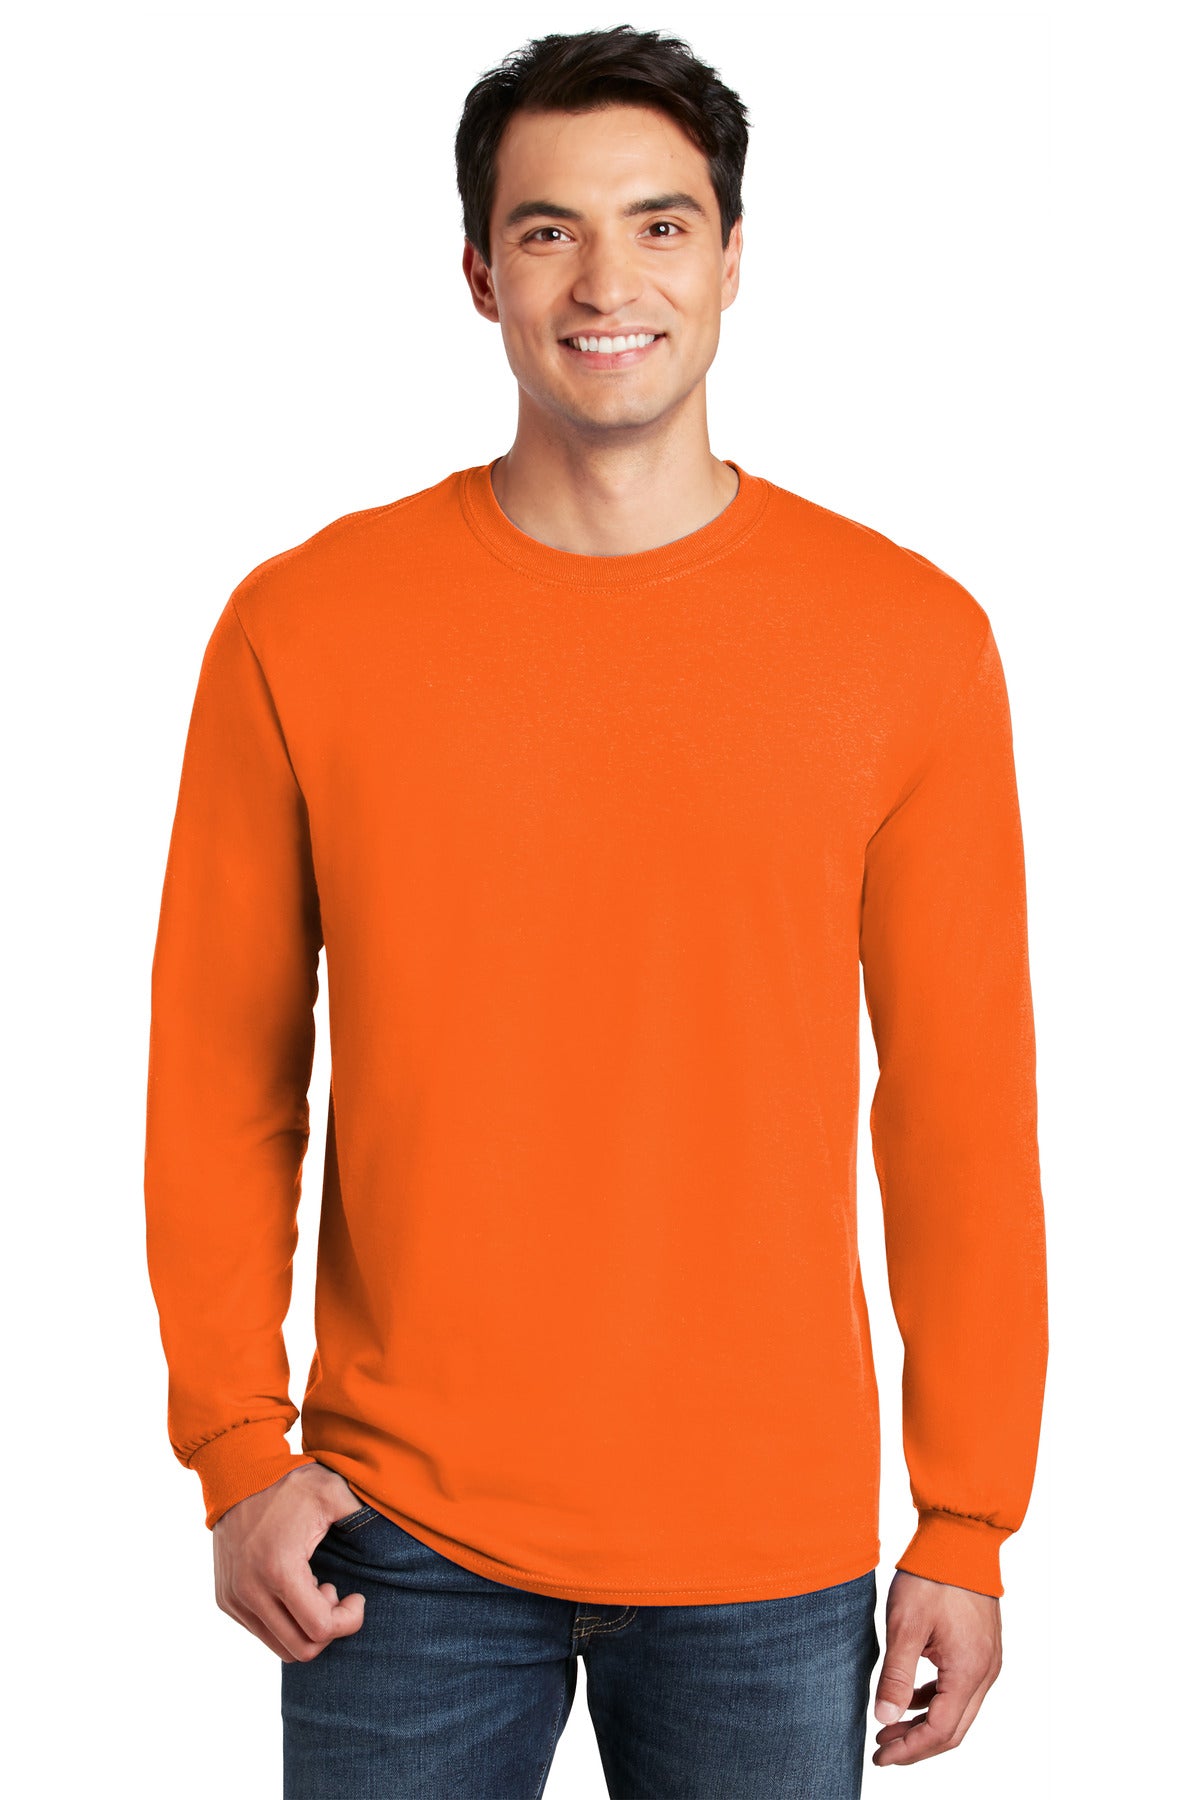 T-Shirts S. Orange Gildan